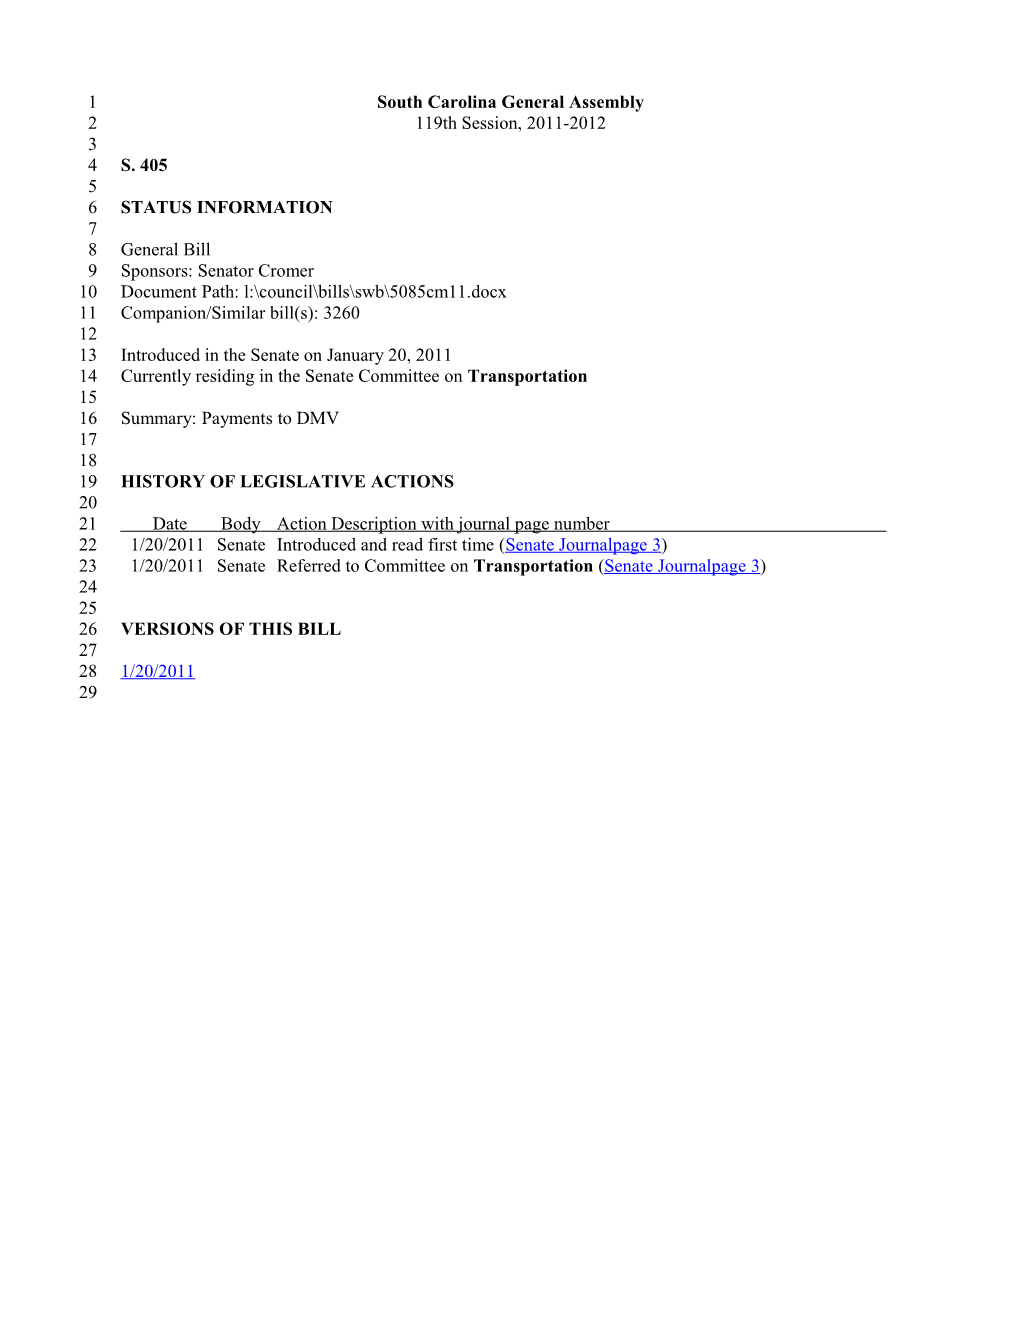 2011-2012 Bill 405: Payments to DMV - South Carolina Legislature Online